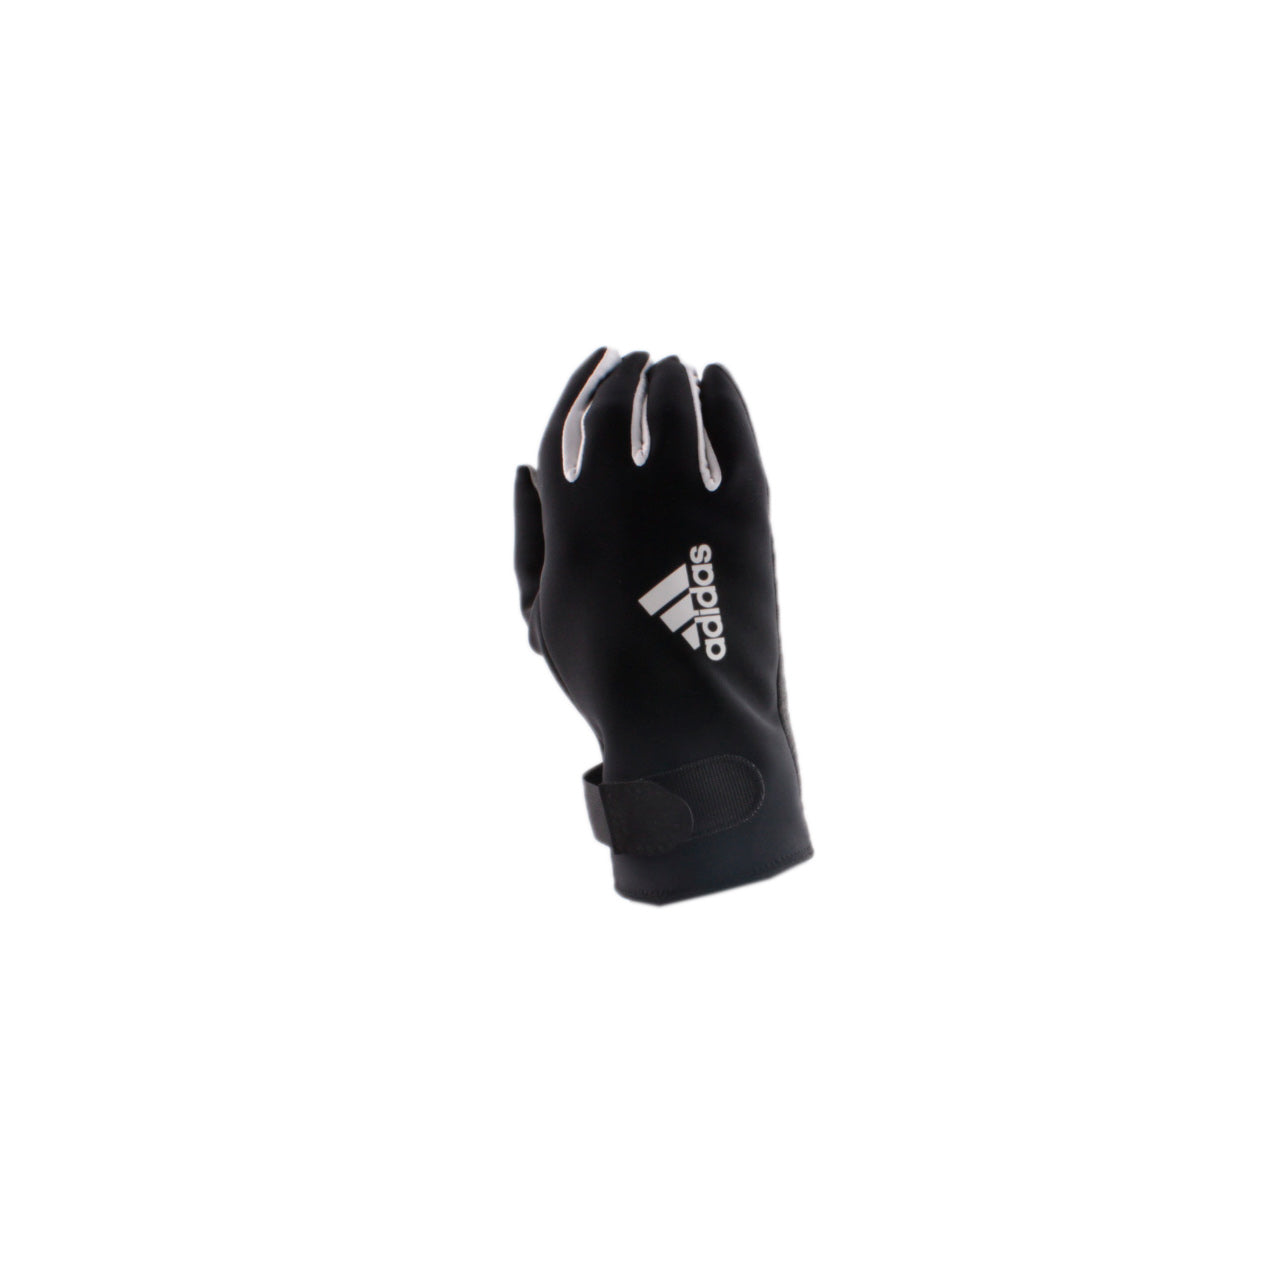 Adidas Cross V13 Handschuhe Glove X-Country Glove Biathlon Alkantara M65420 7,5